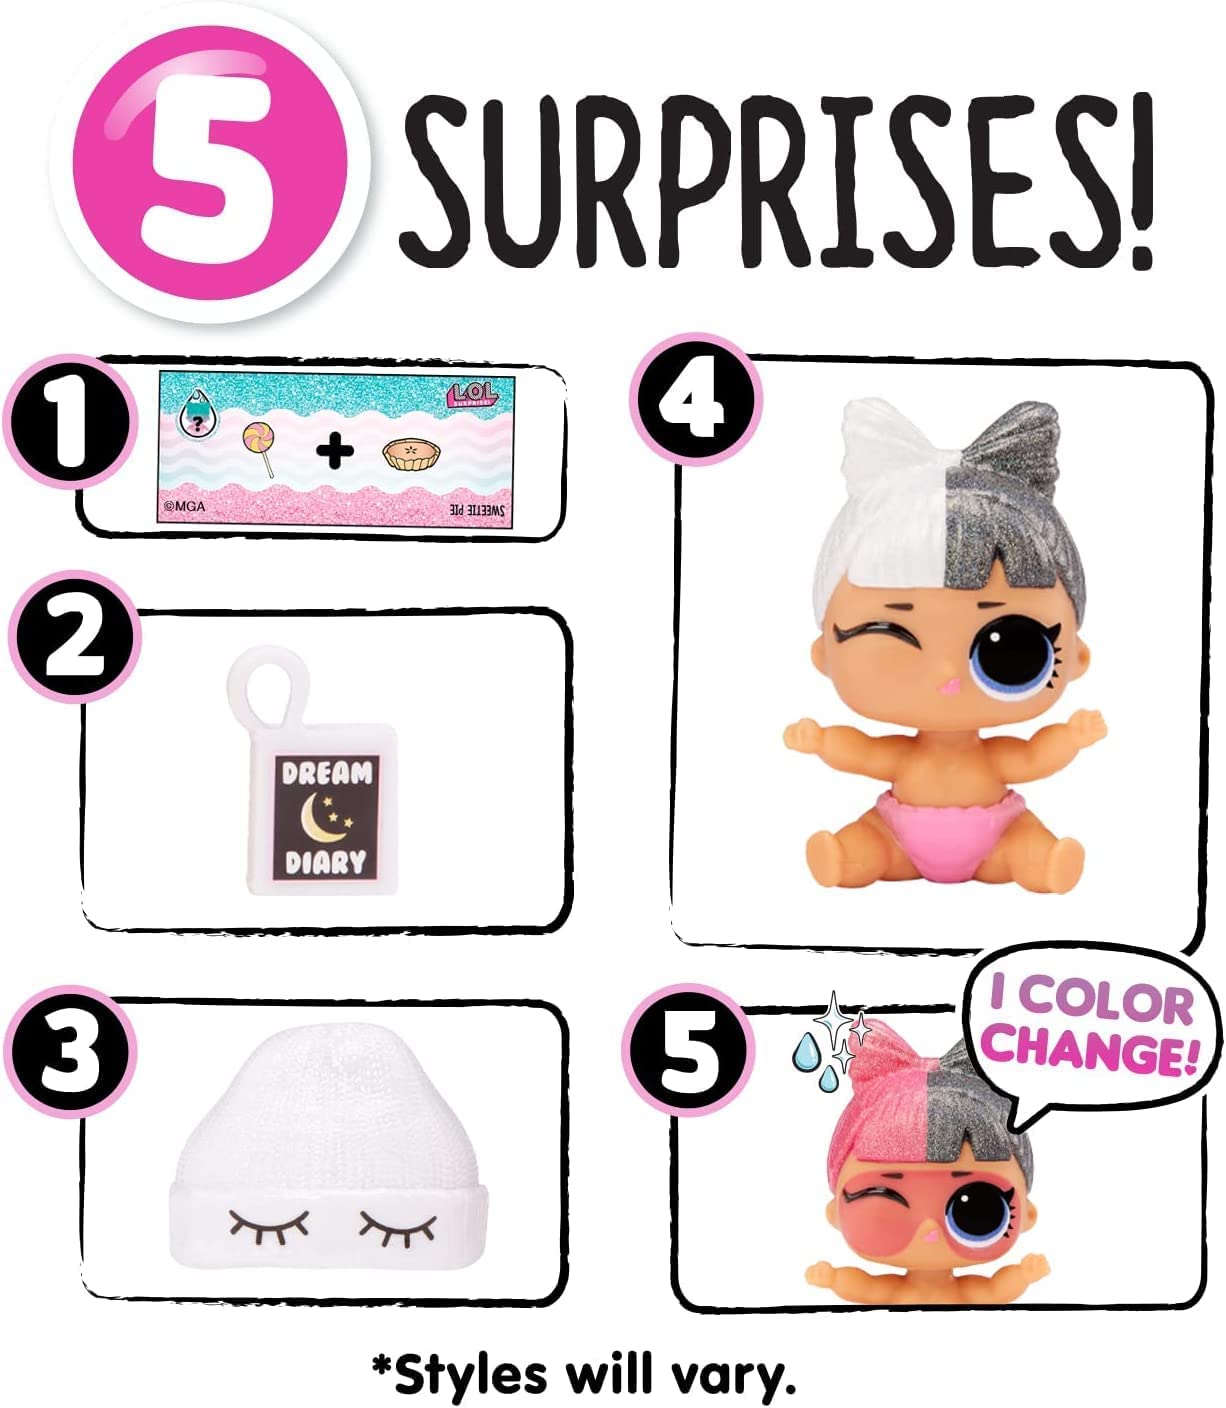 L.O.L. Surprise! Boneca Change Lil Sis Set com Acessórios com Glitter - 5 Surpresas 4+